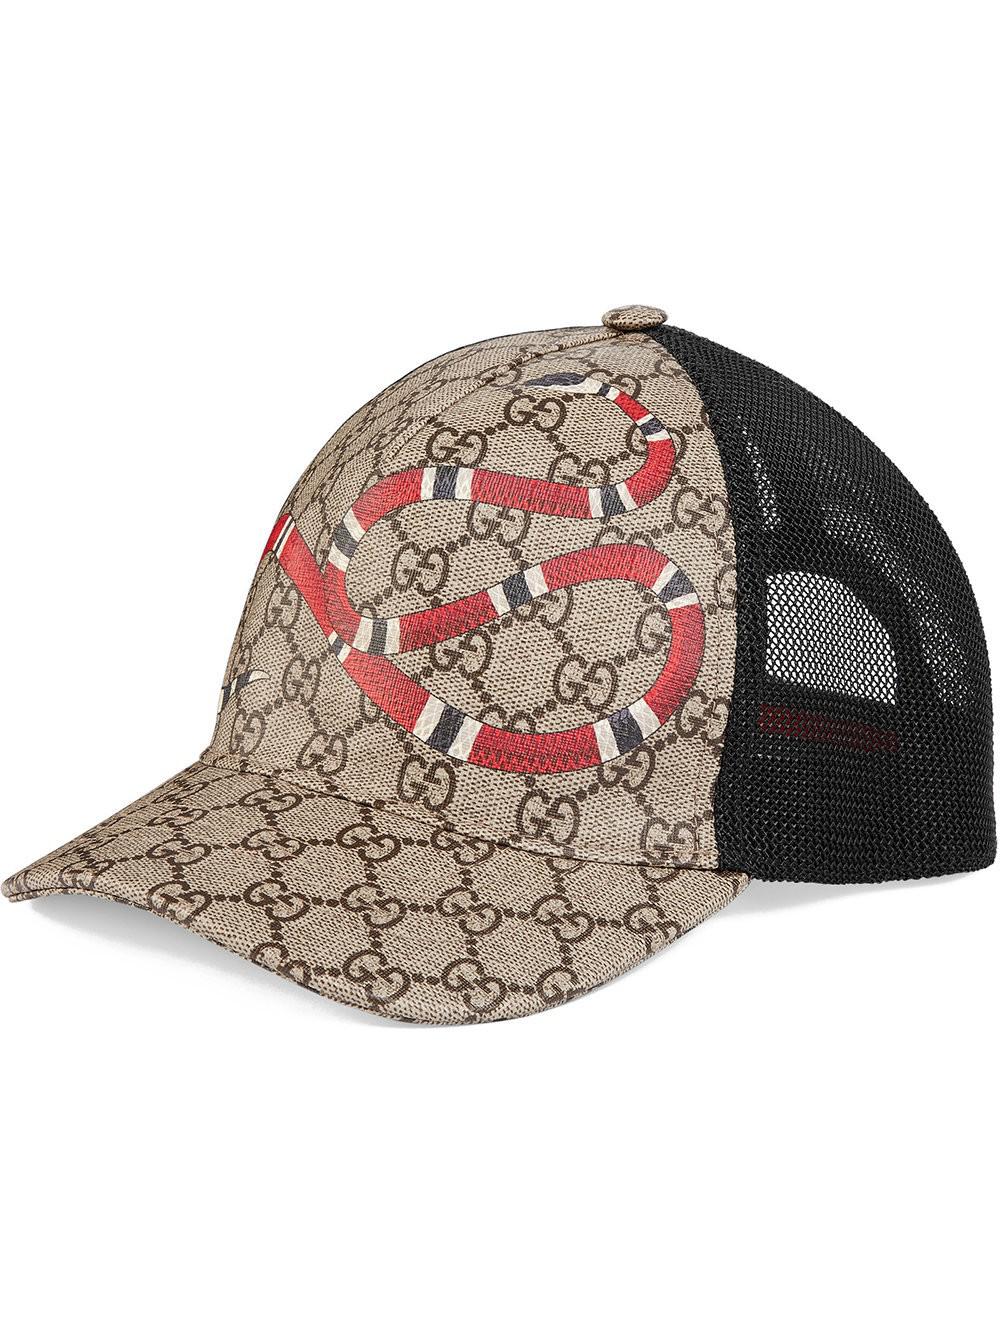 gucci baseball cap snake